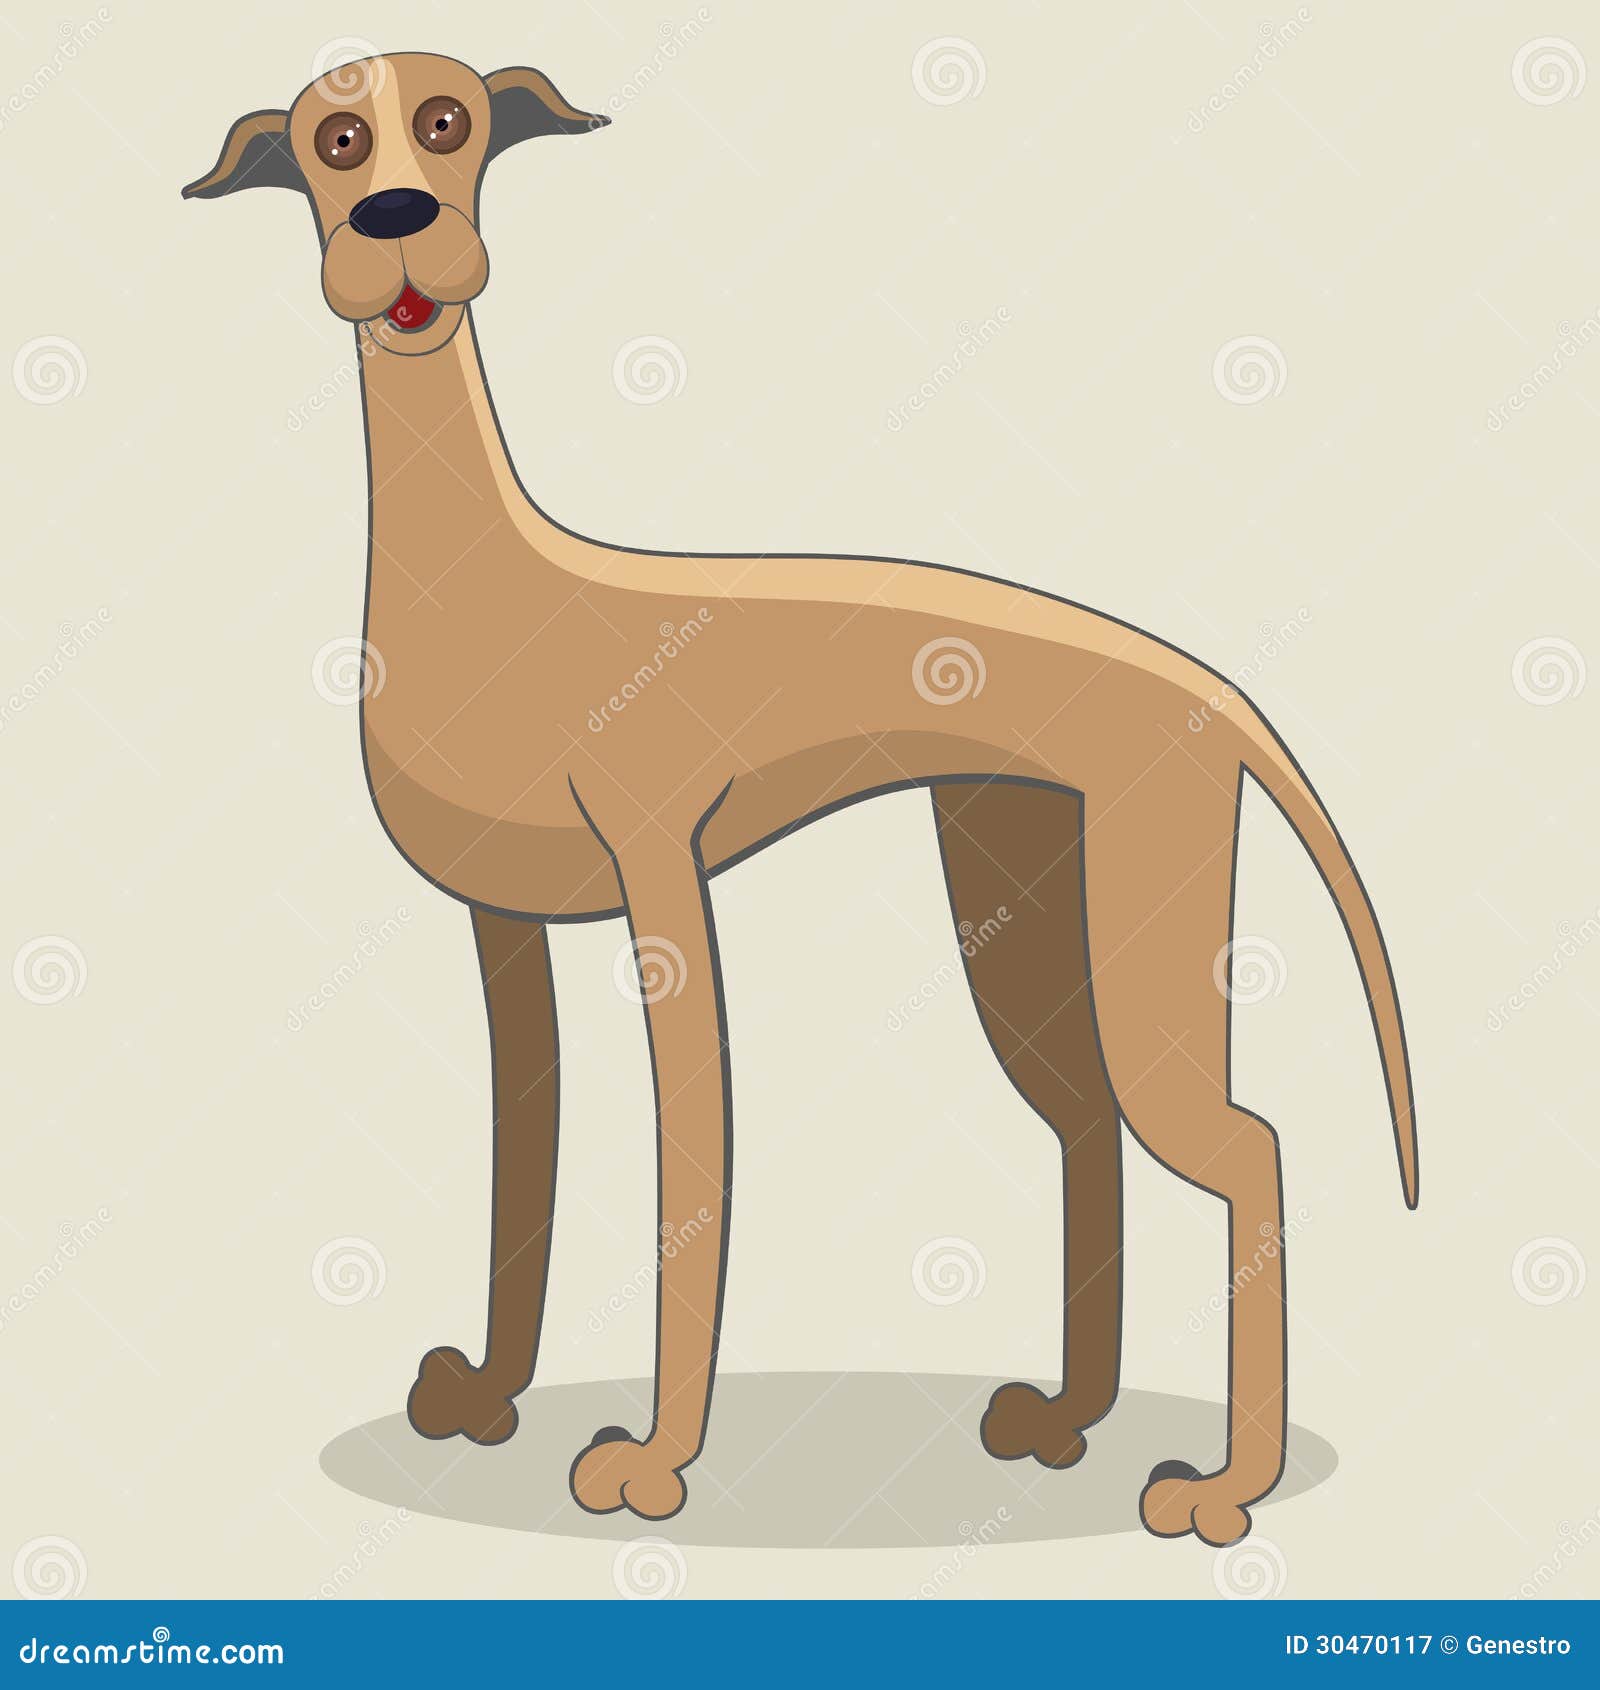 greyhound dog clipart - photo #38